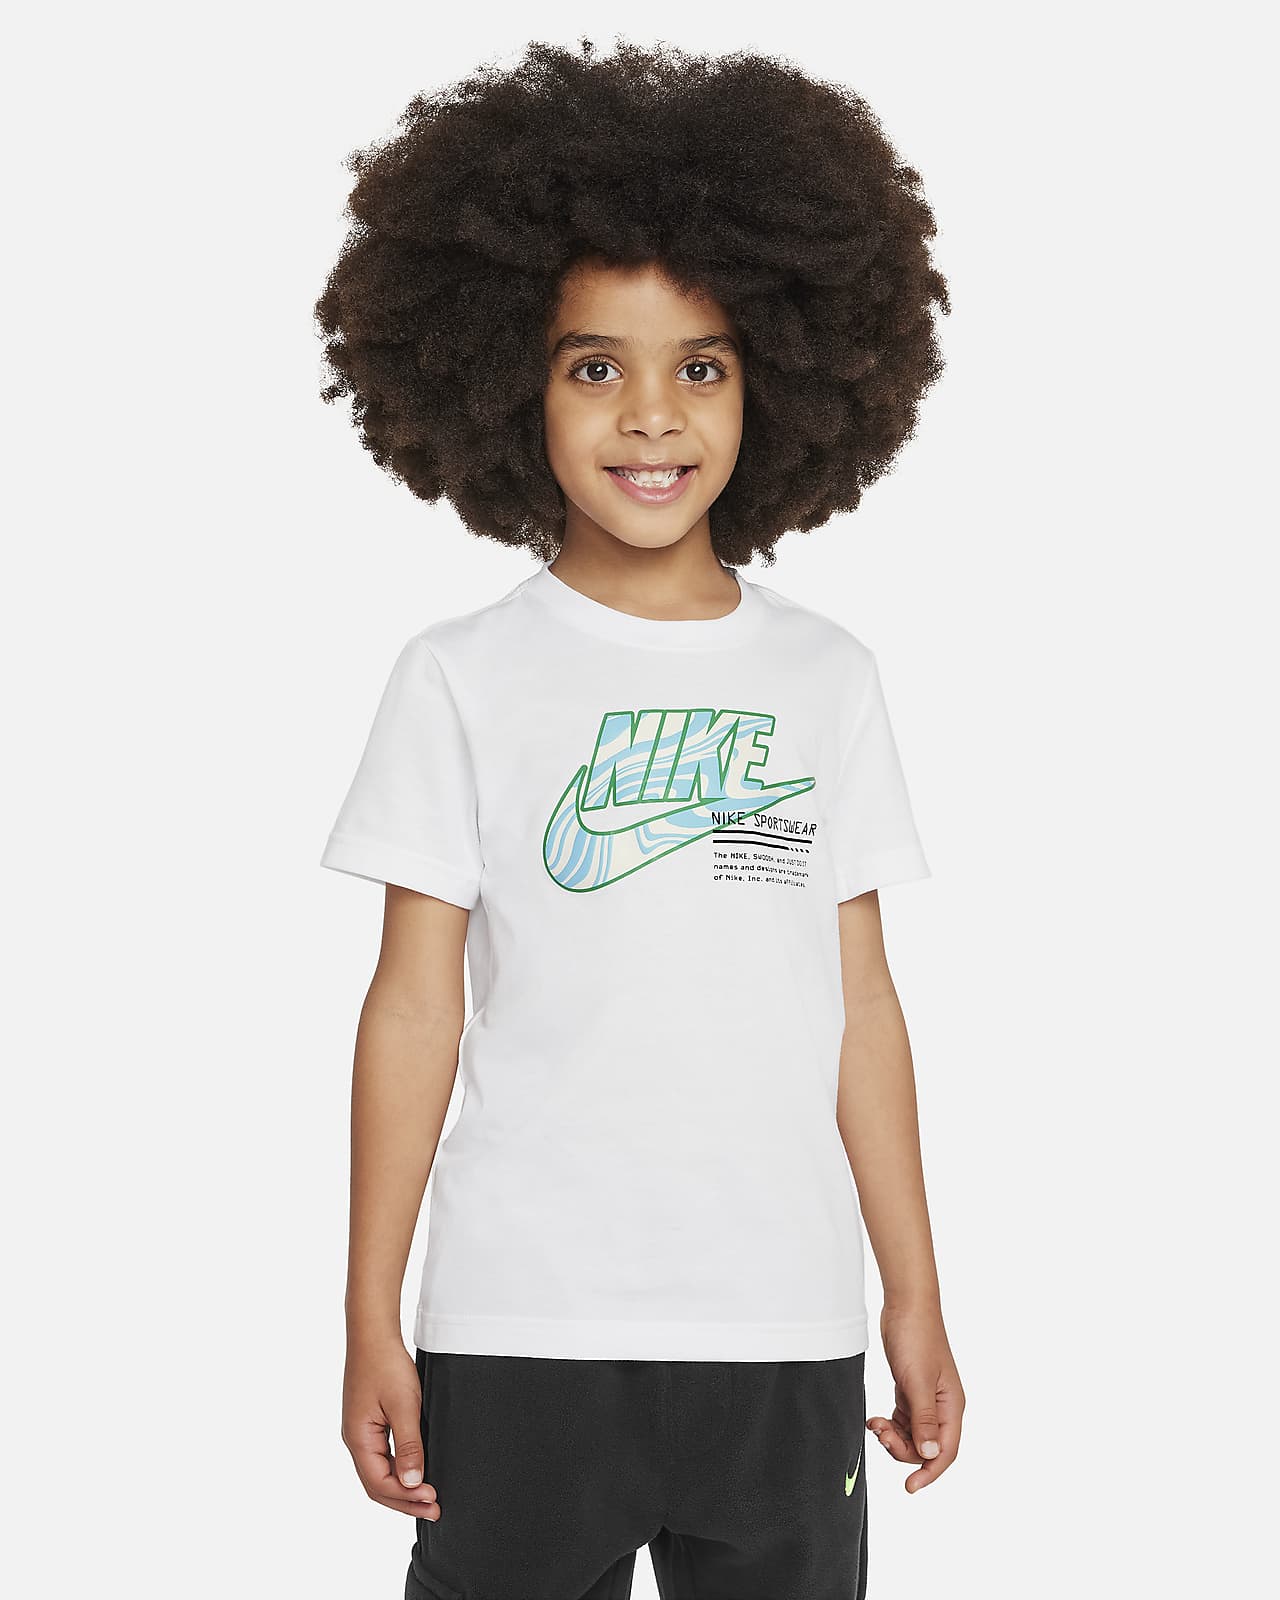 Futura Kids\' Little Nike T-Shirt. Graphic